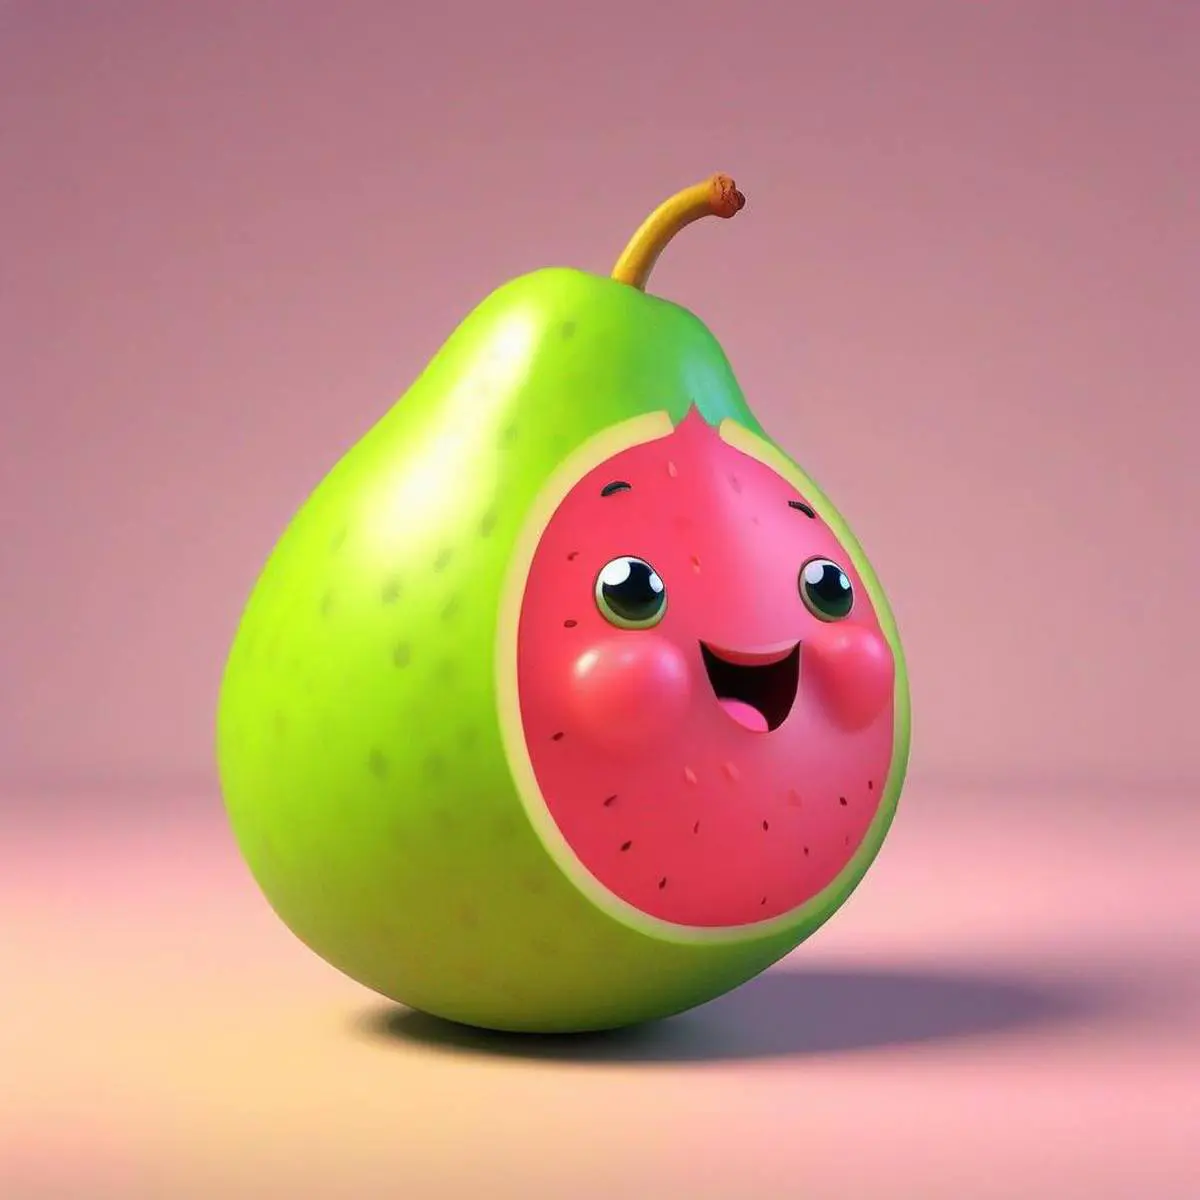 Guava puns